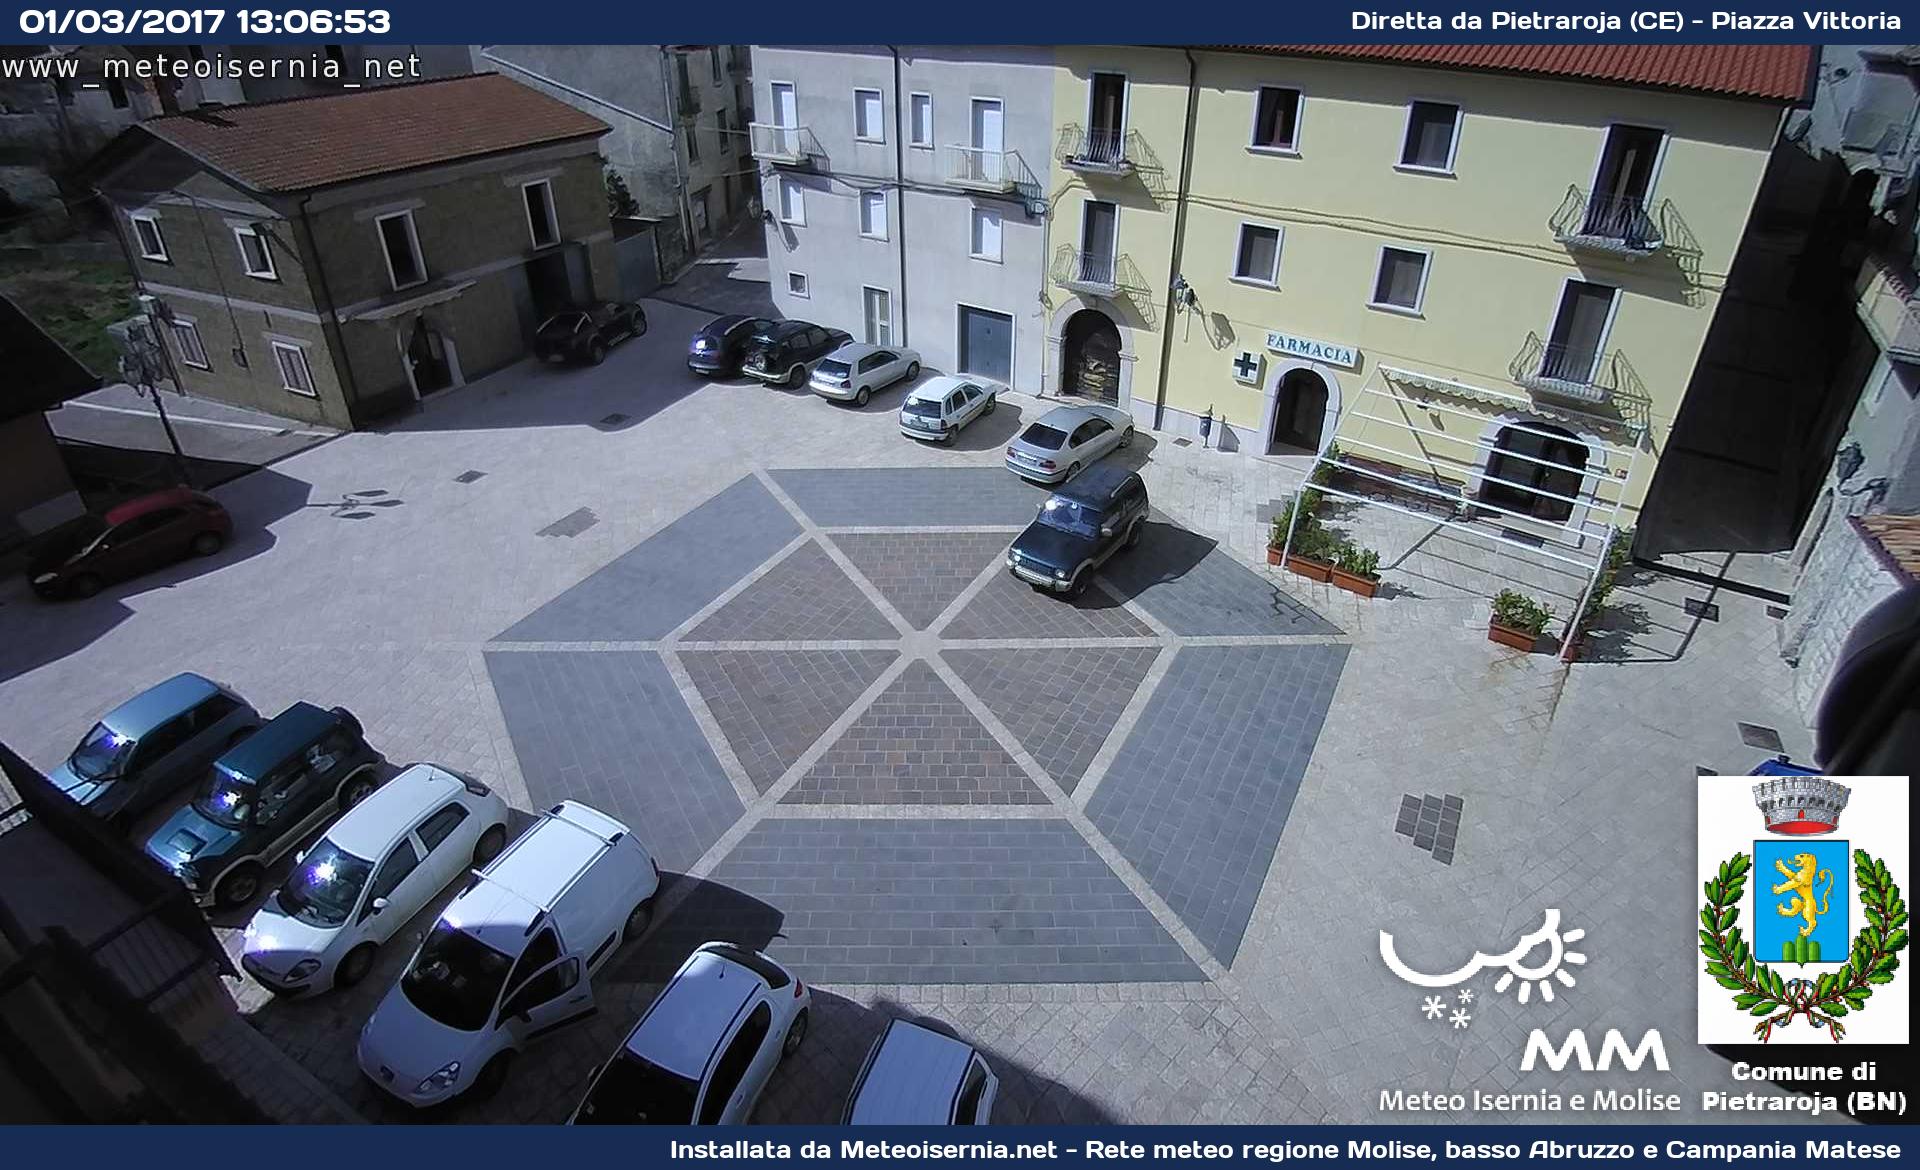 Webcam di Pietraroja Piazza Vittoria